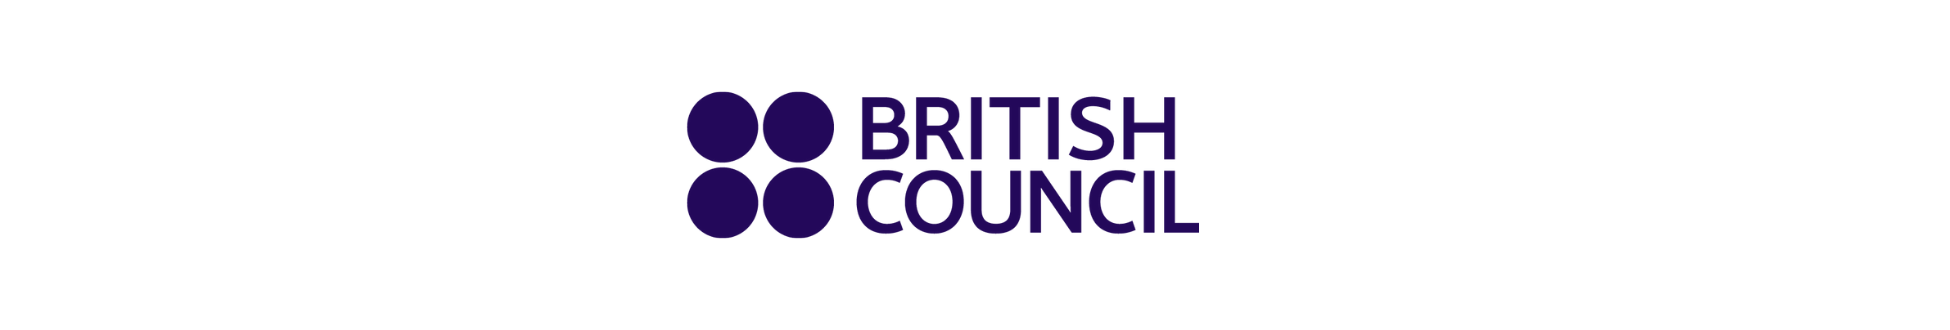 British Council logo 